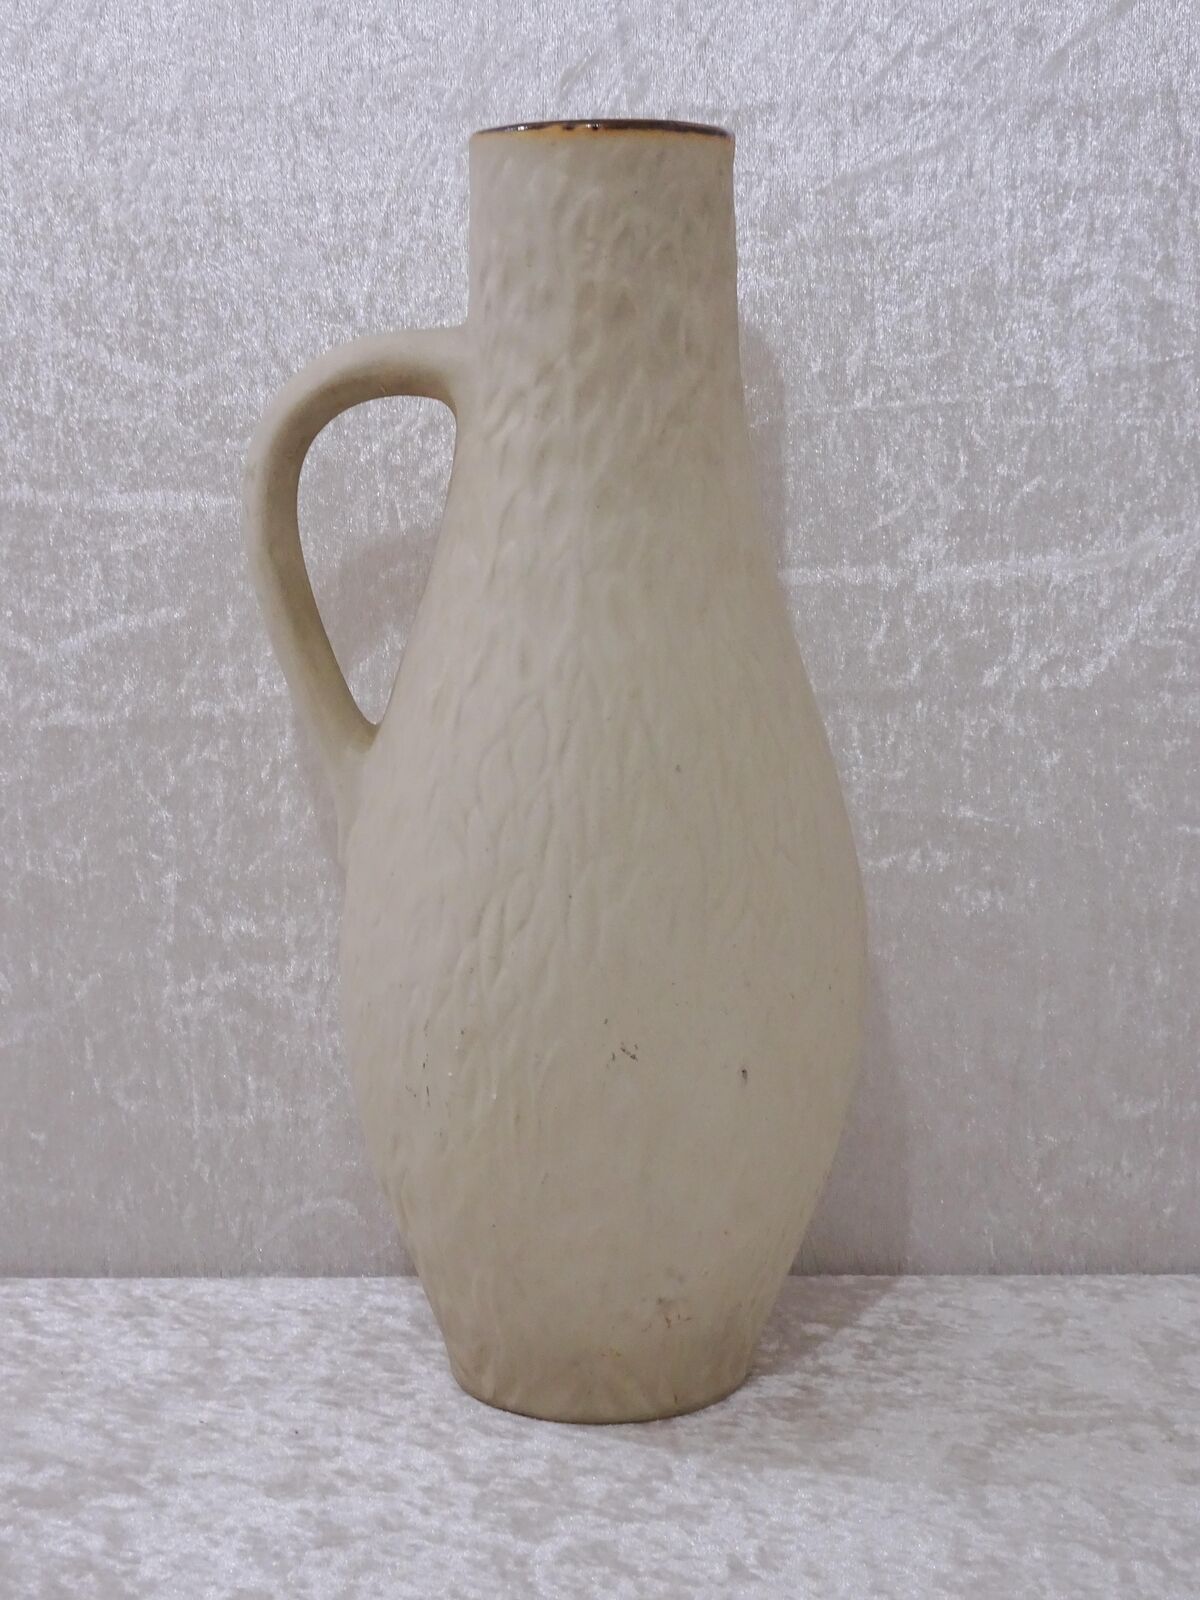 Willi Schulze Crinitz GDR Design Ceramic Vase Leaf Pitcher - Vintage - 34 CM